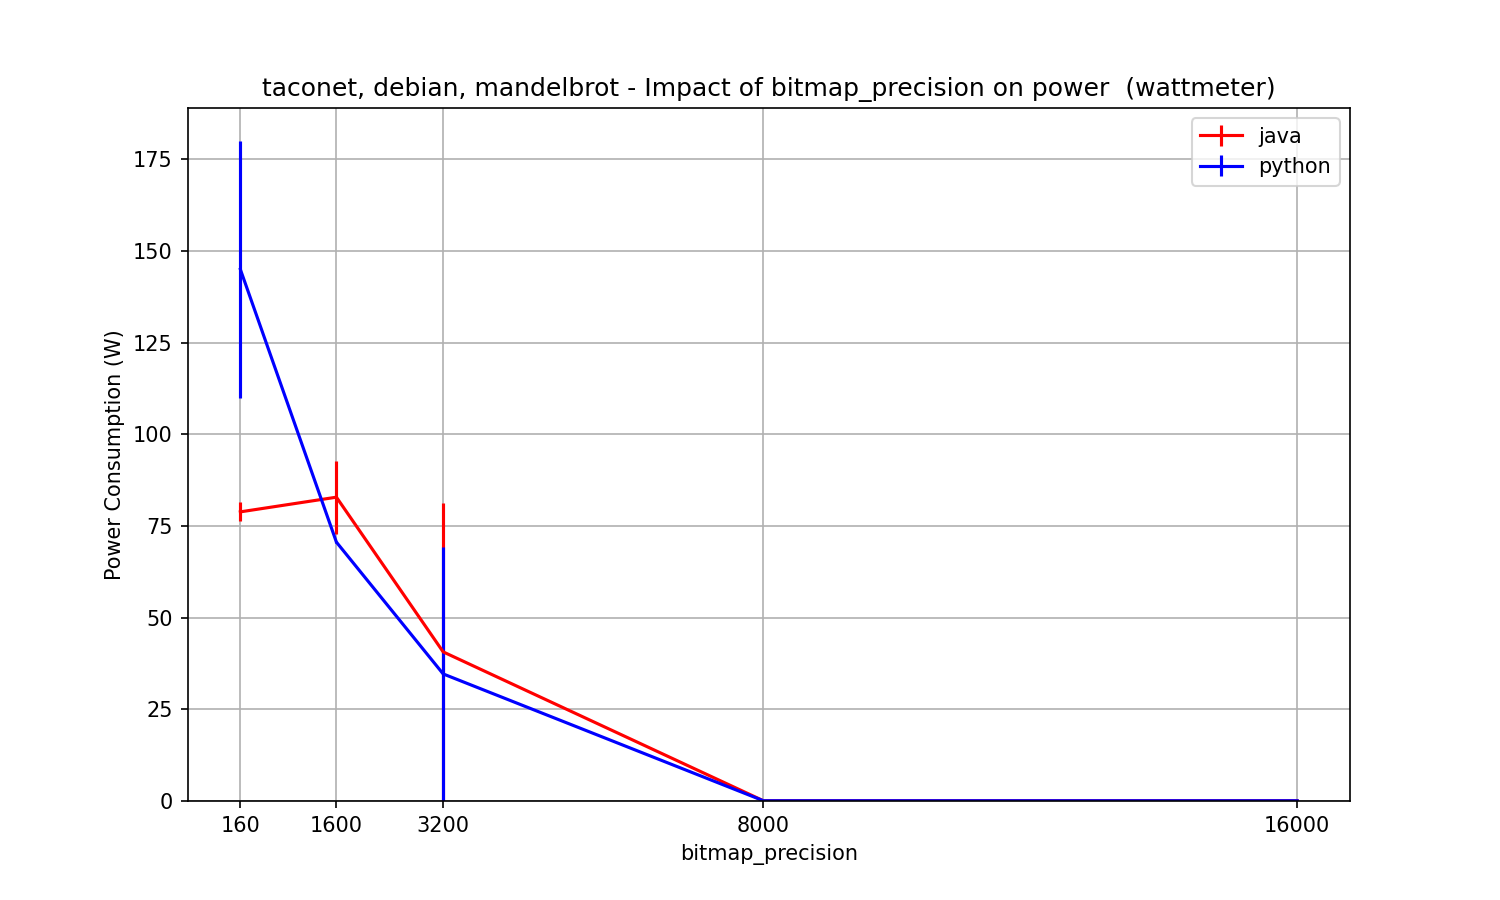 tp-wattmeter-files/b01-01-mandelbrot-results/taconet_b01-01_mandelbrot_bitmap_precision_impact_power.png